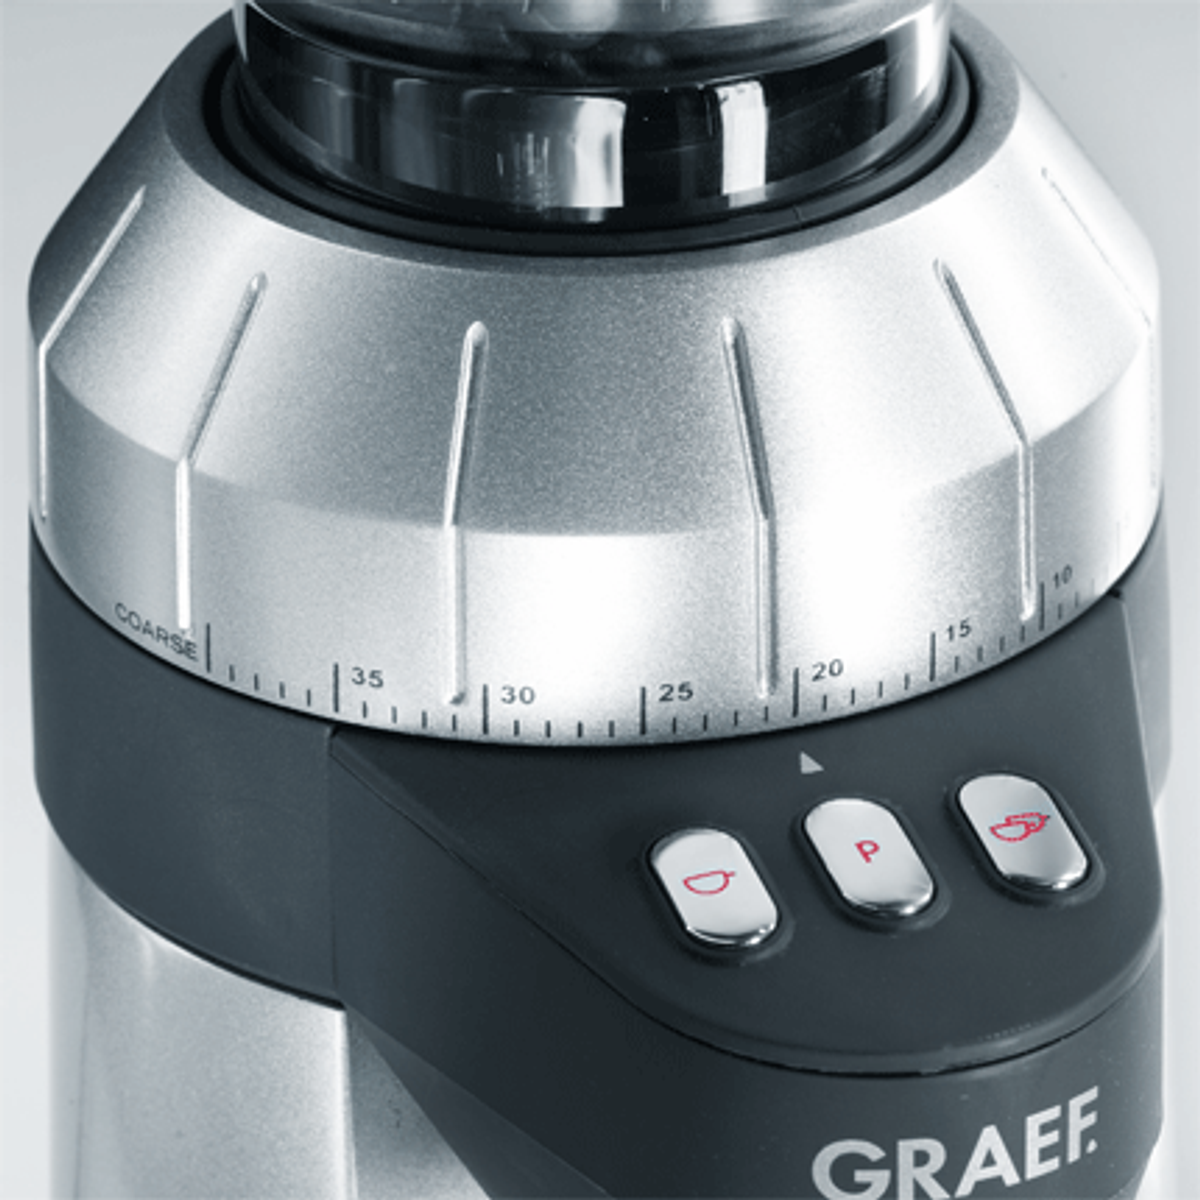 Edelstahl-Kegelmahlwerk) Watt, (128 EU Silber GRAEF Kaffeemühle KAFFEEMÜHLE 900 CM